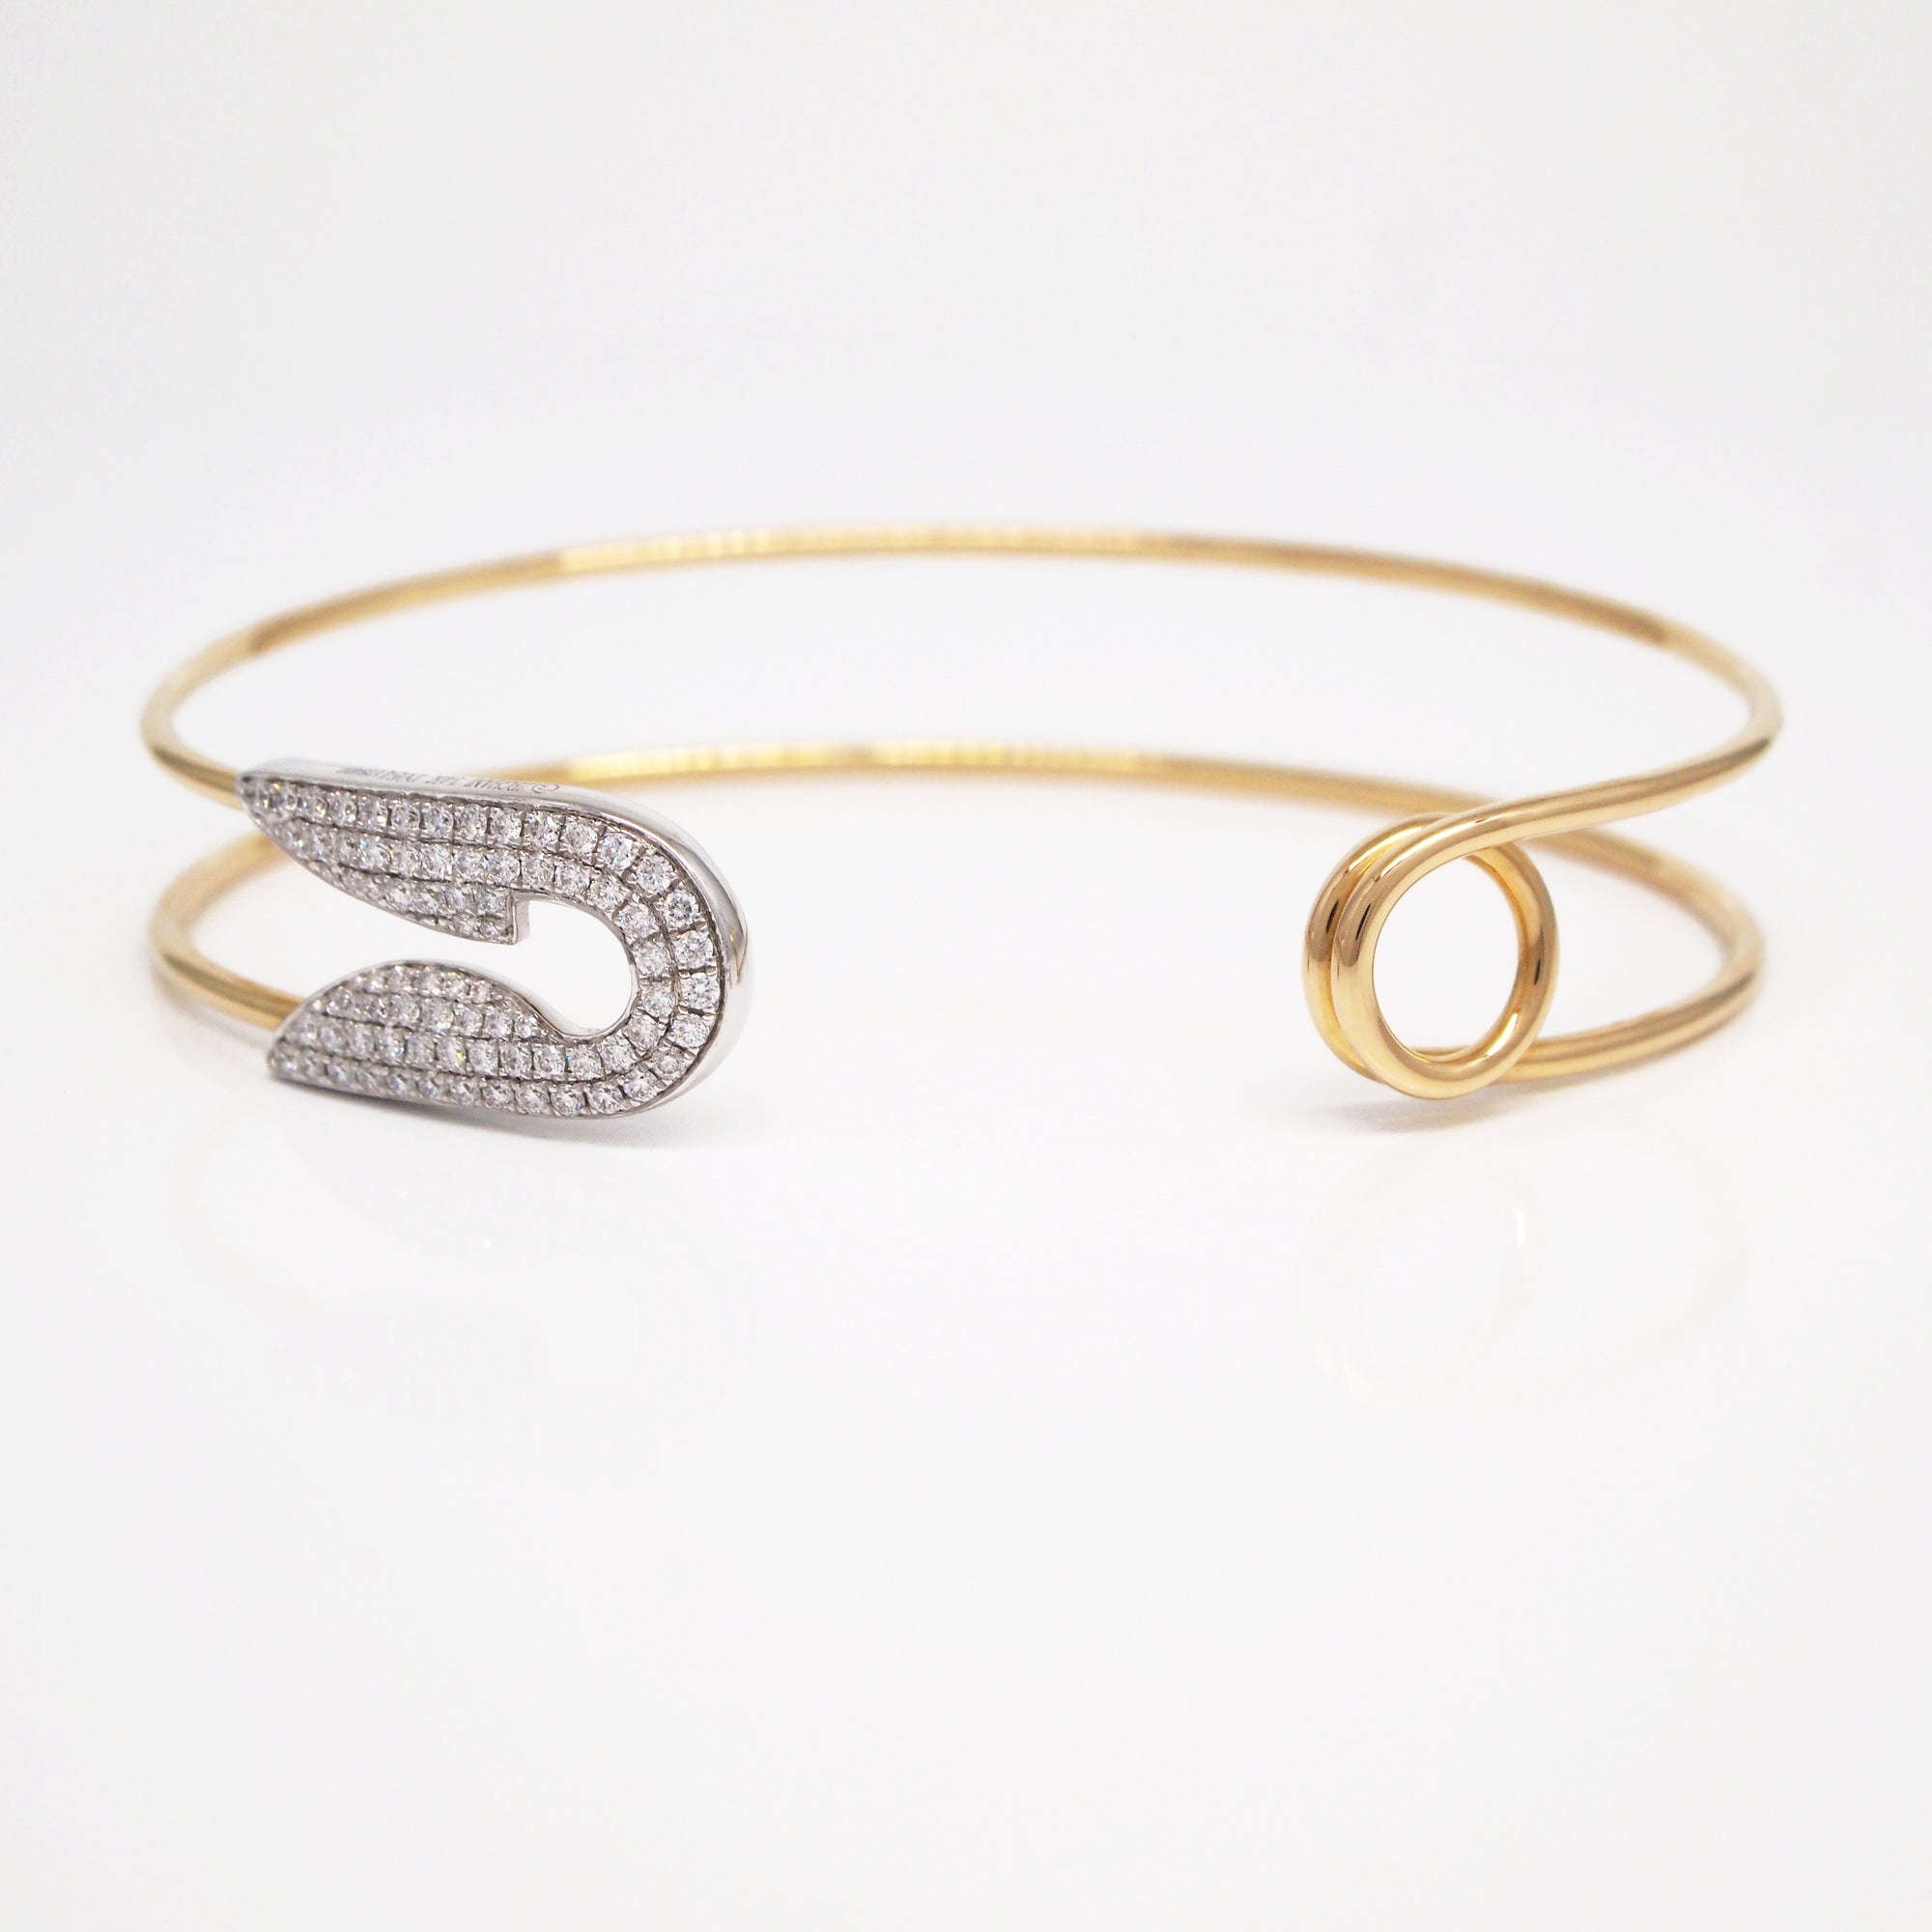 14K yellow and white gold diamond safety pin style bangle bracelet